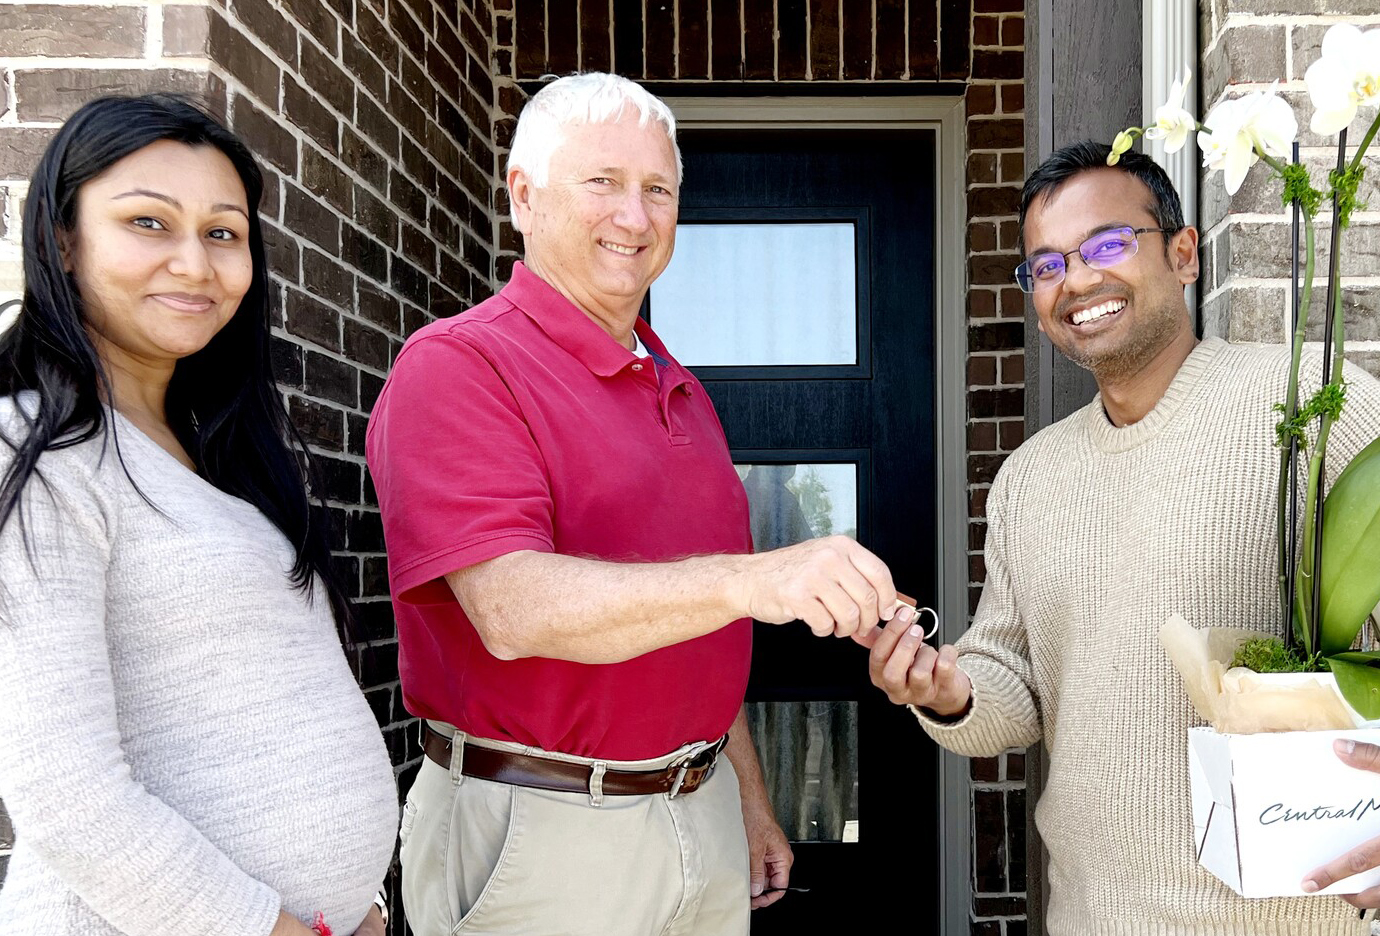 Beazer employee handing homeowners key to their new home